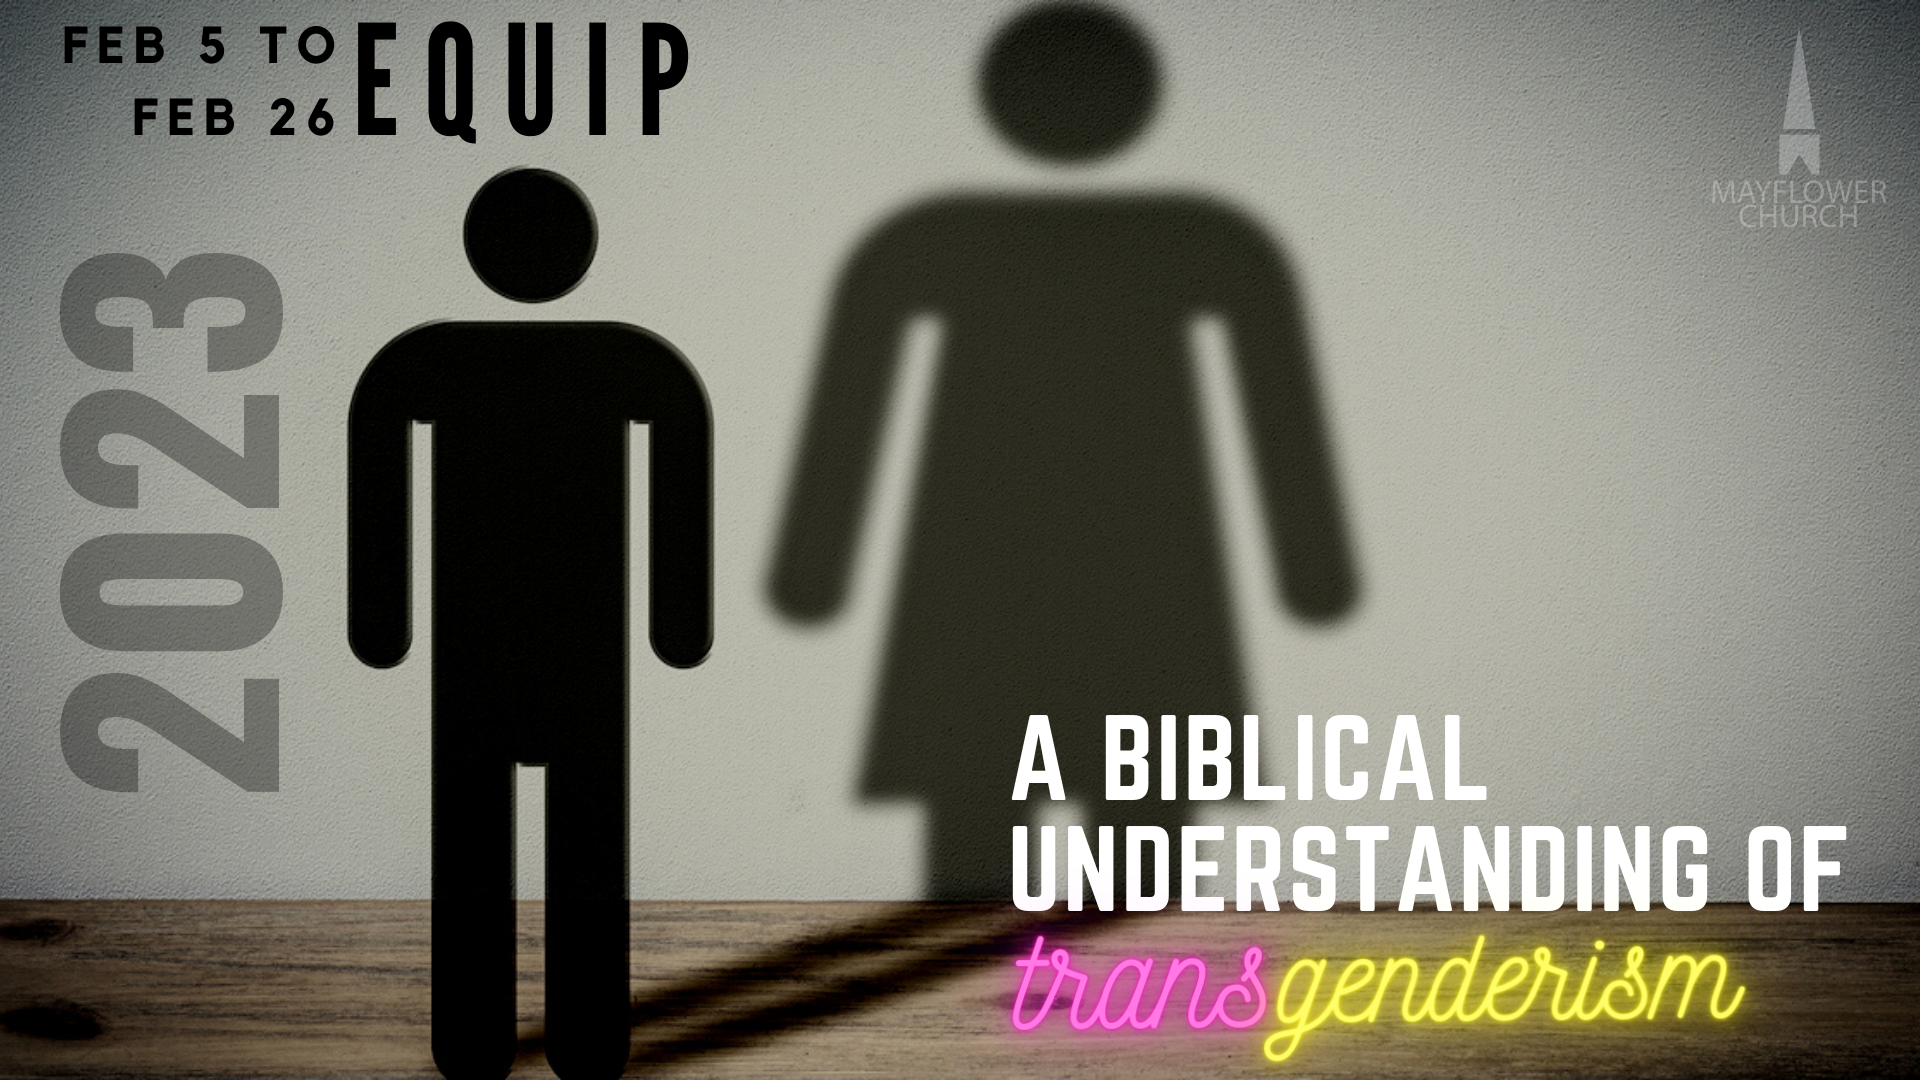 A Biblical Understanding of Transgenderism